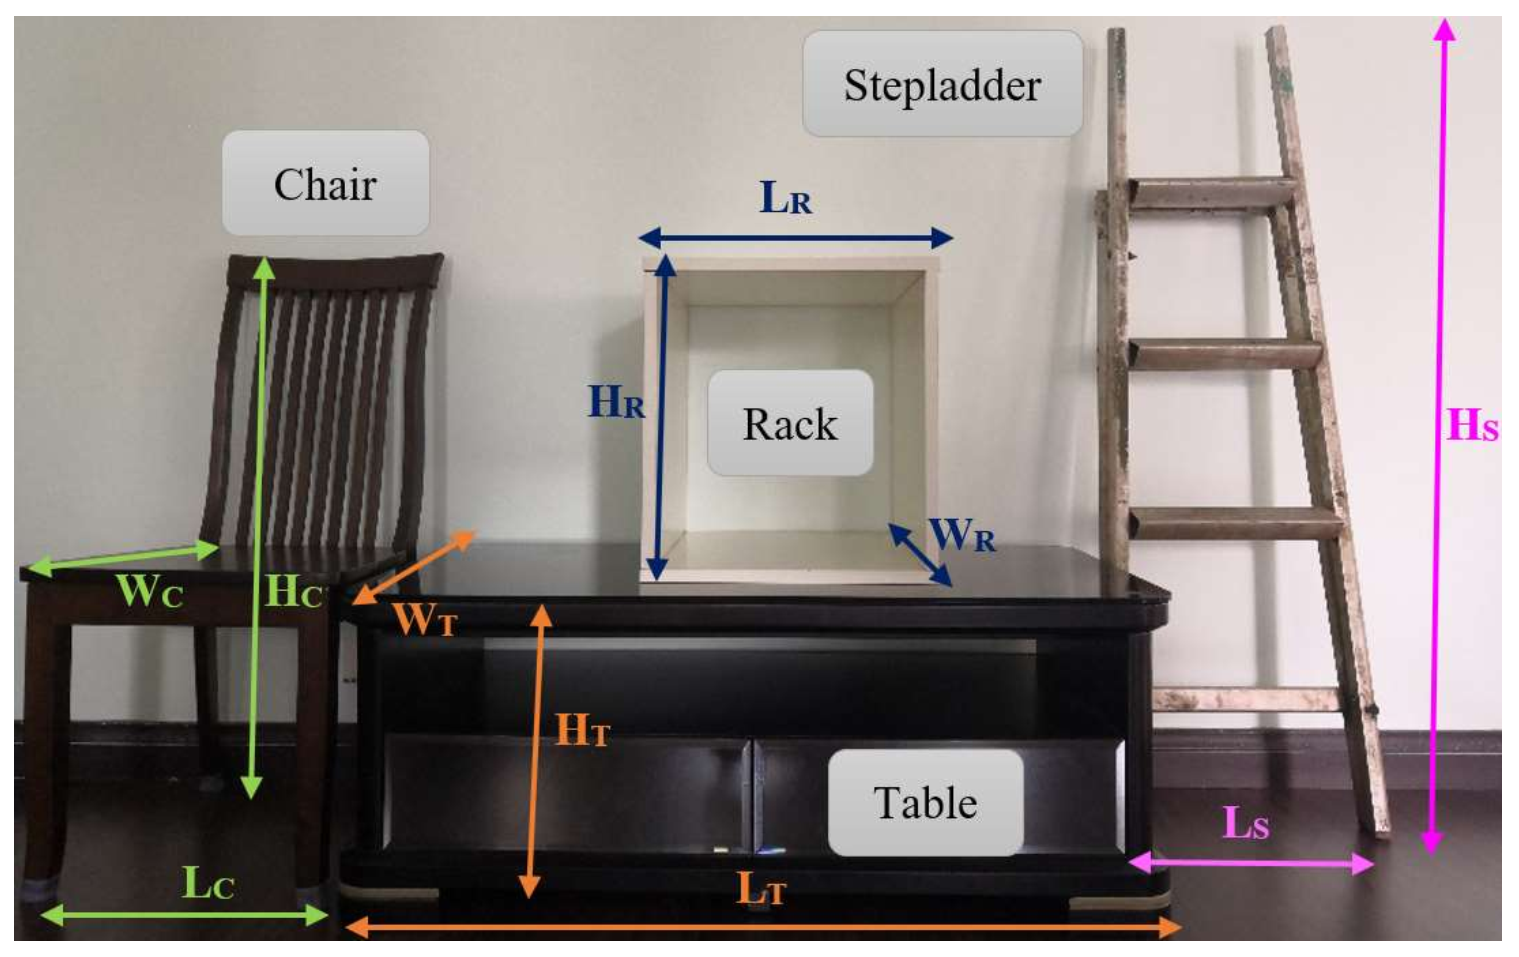 An analysis of transformable space saving furniture